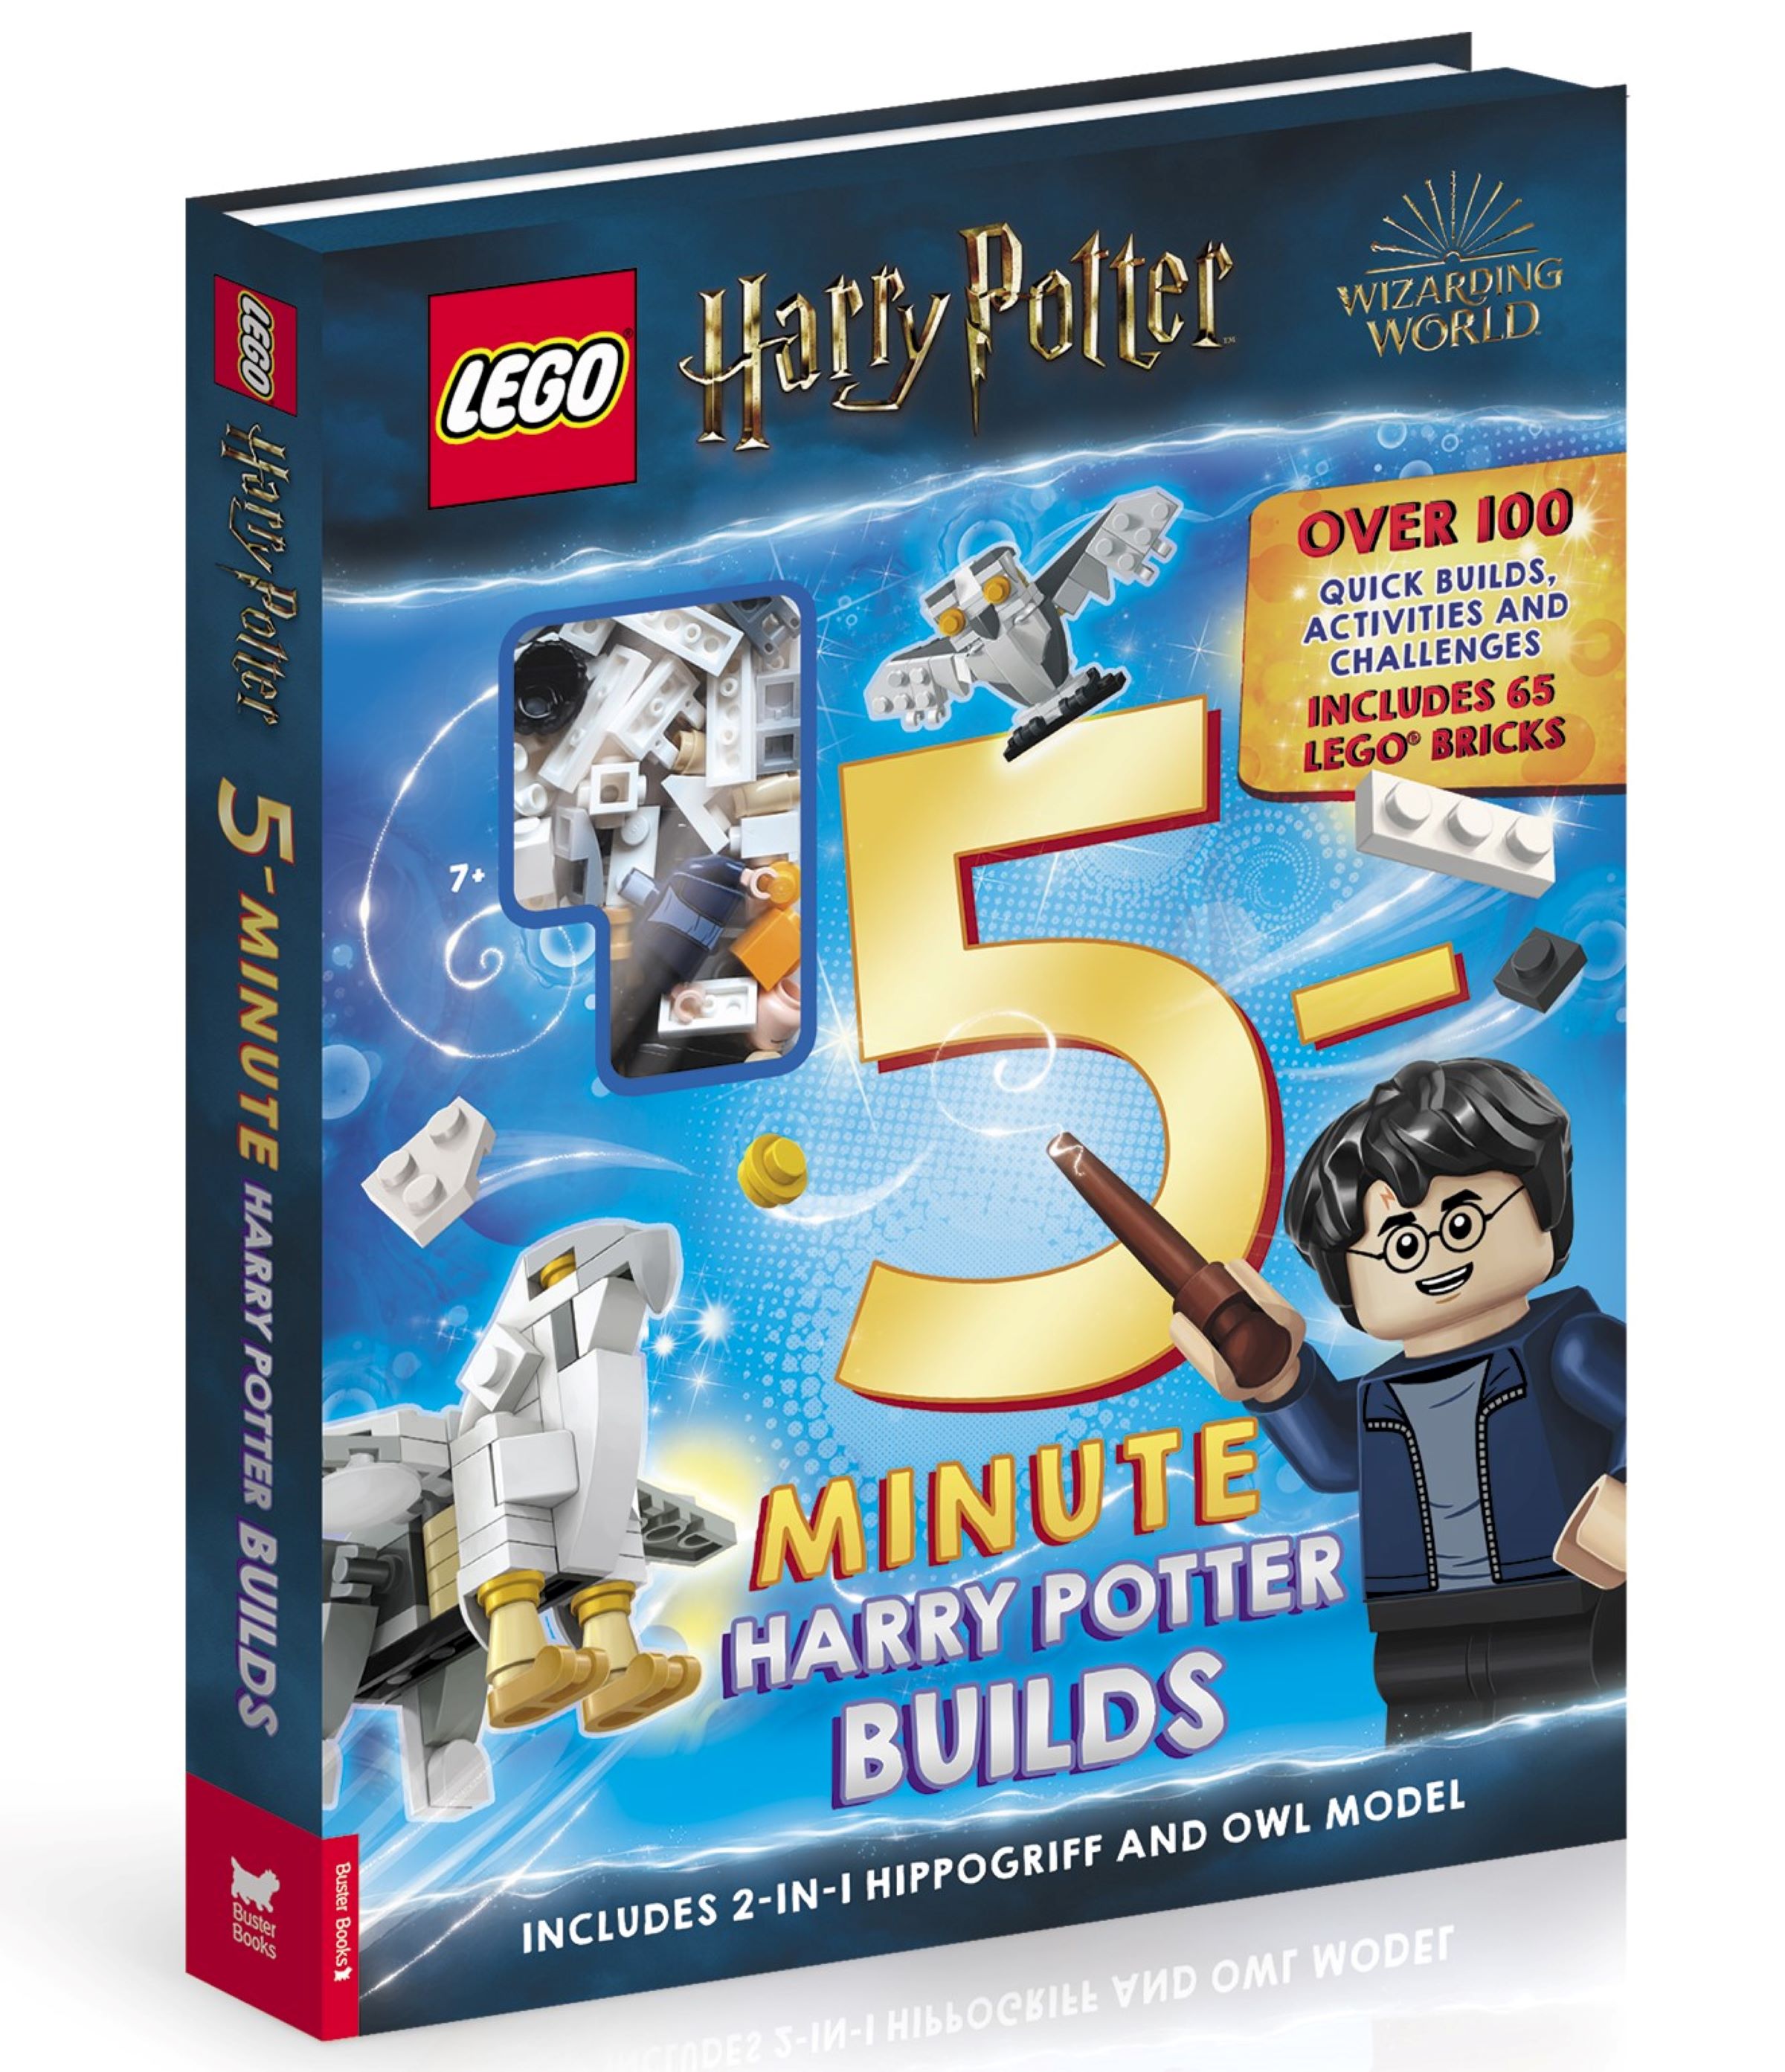 5-Minute Harry Potter™ Builds 5007554, Harry Potter™